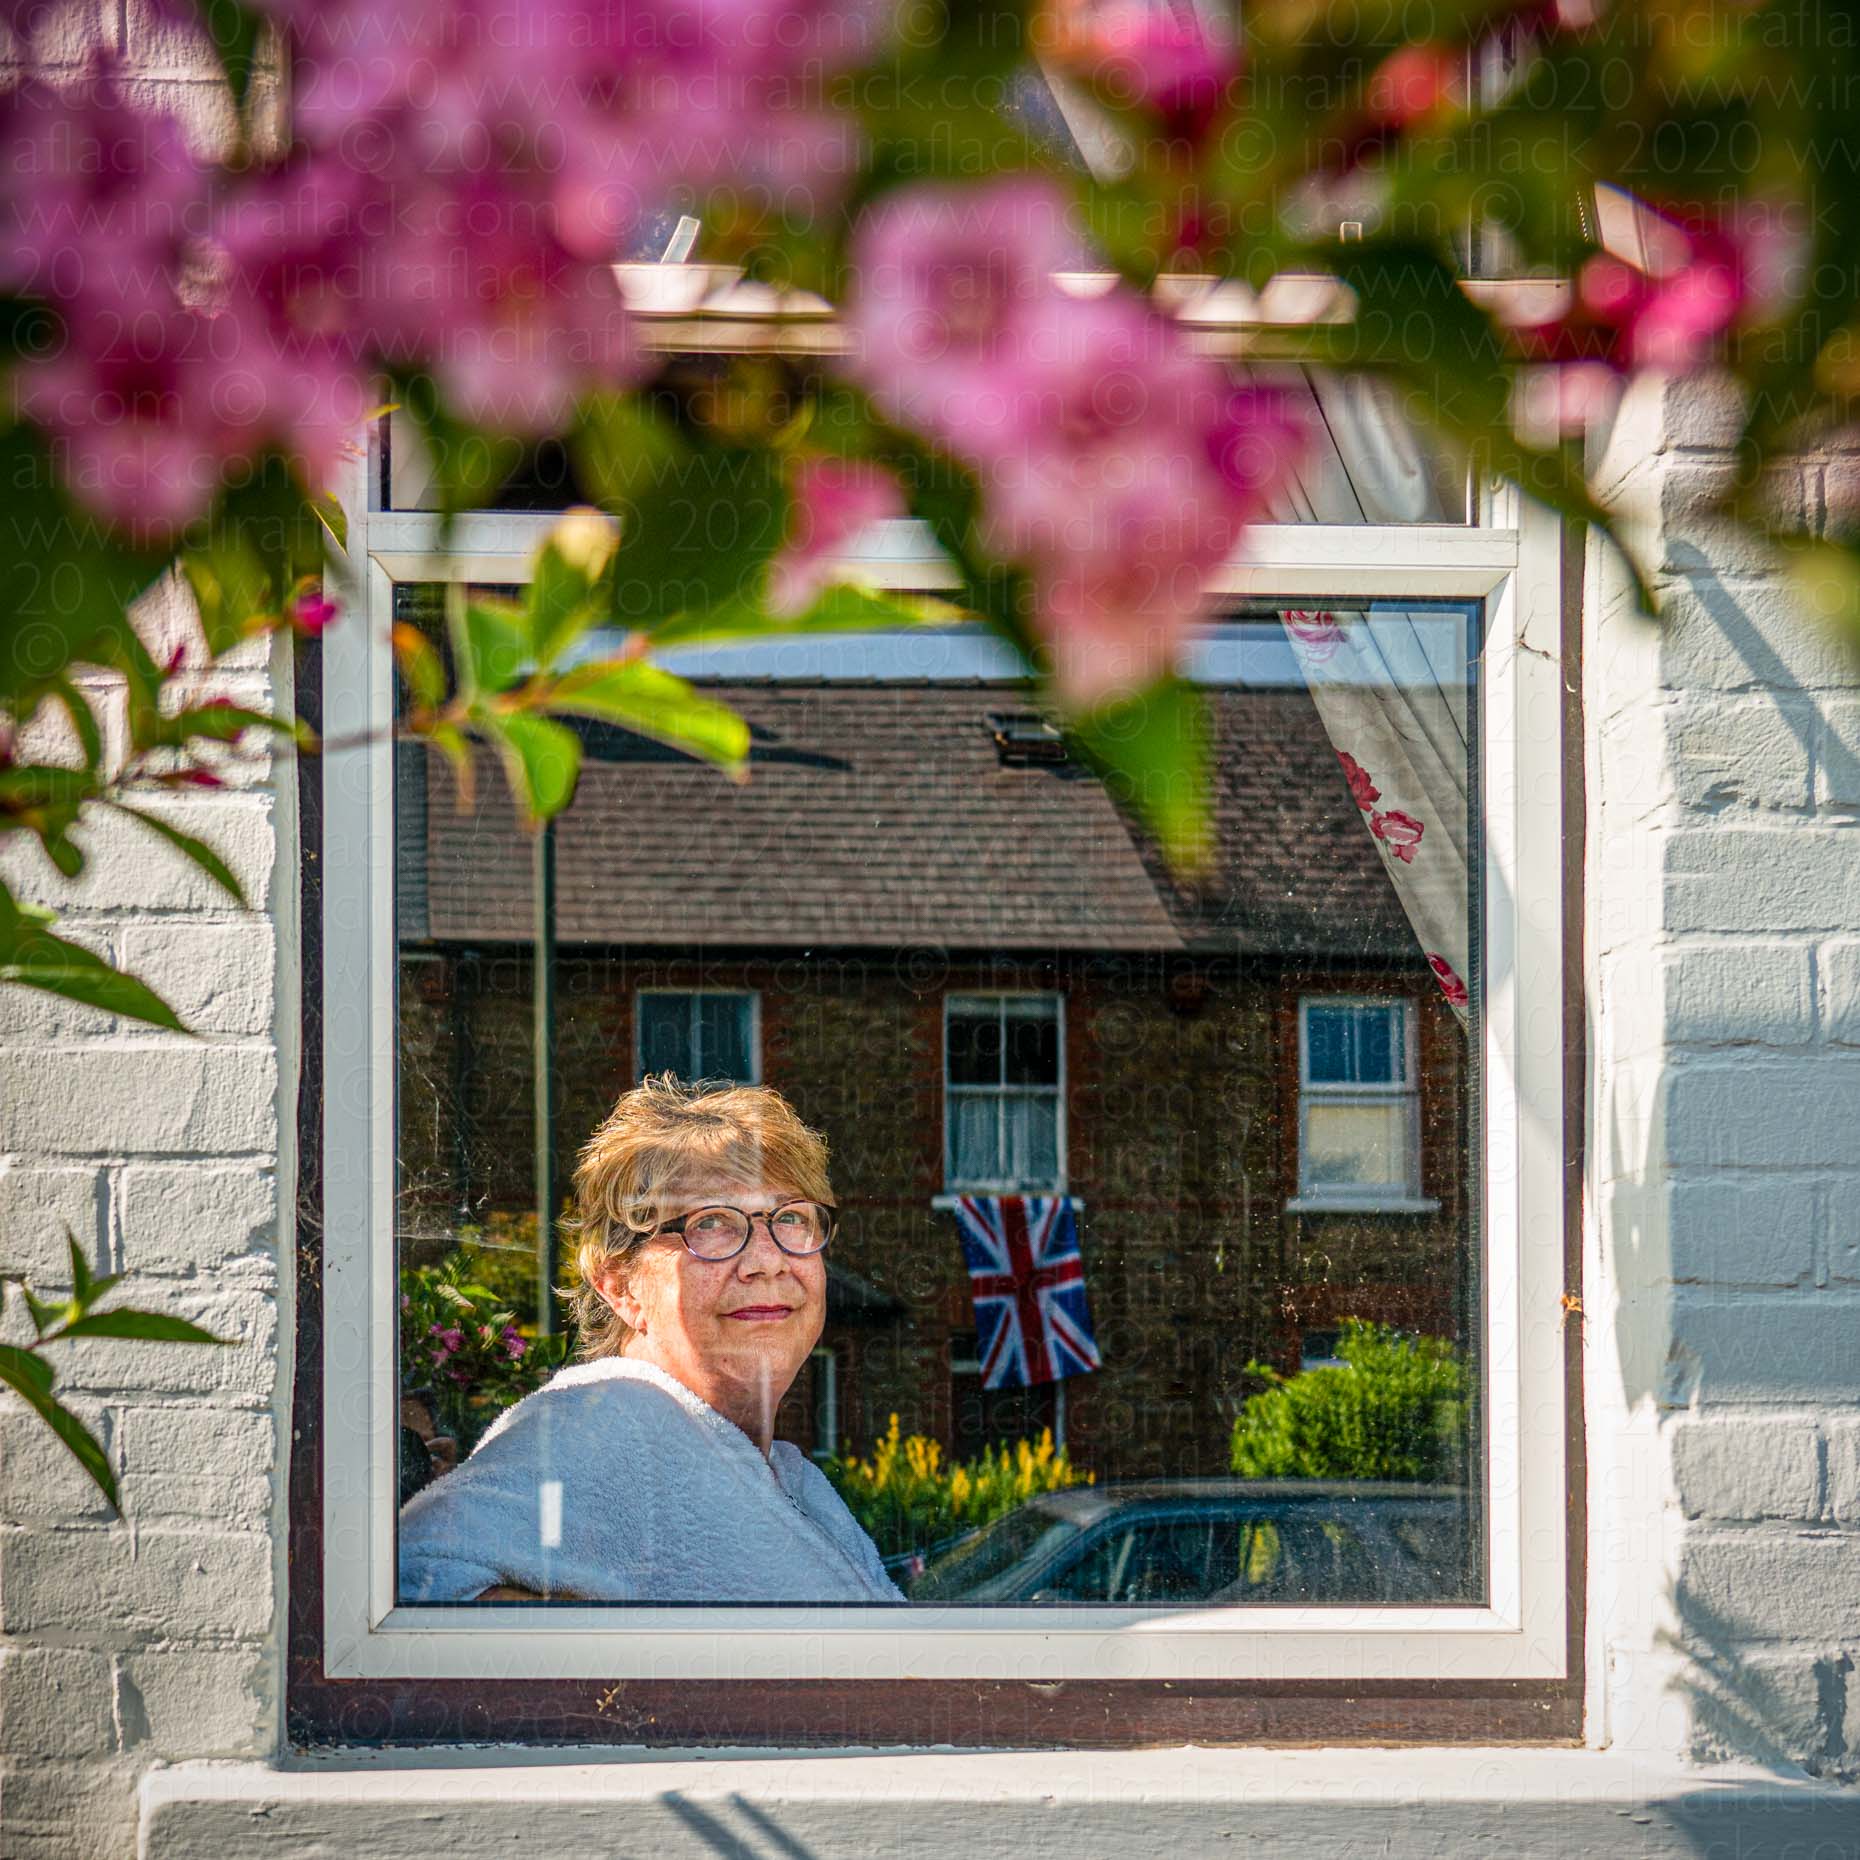 Janet neighbours in lockdown portrait taken by Indira Flack portrait photographer